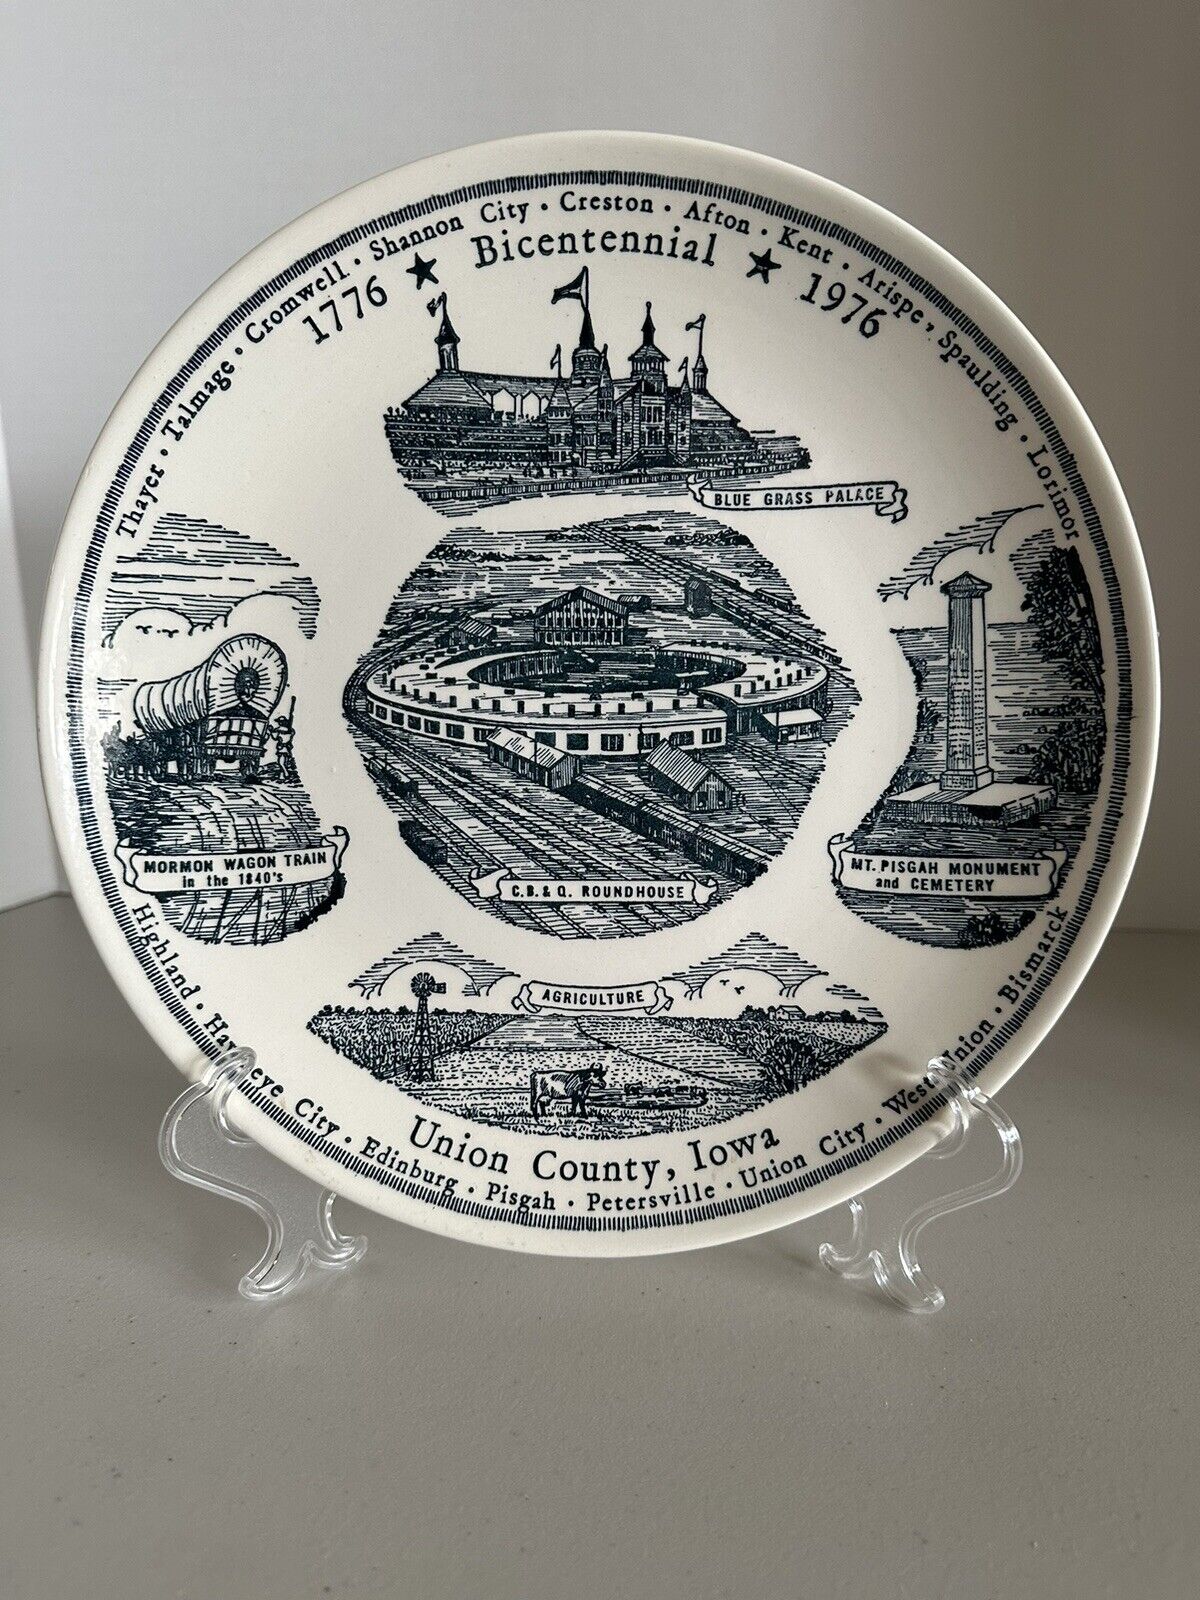 Bicentennial 1776-1976 Union County Iowa Kettlesprings Plate